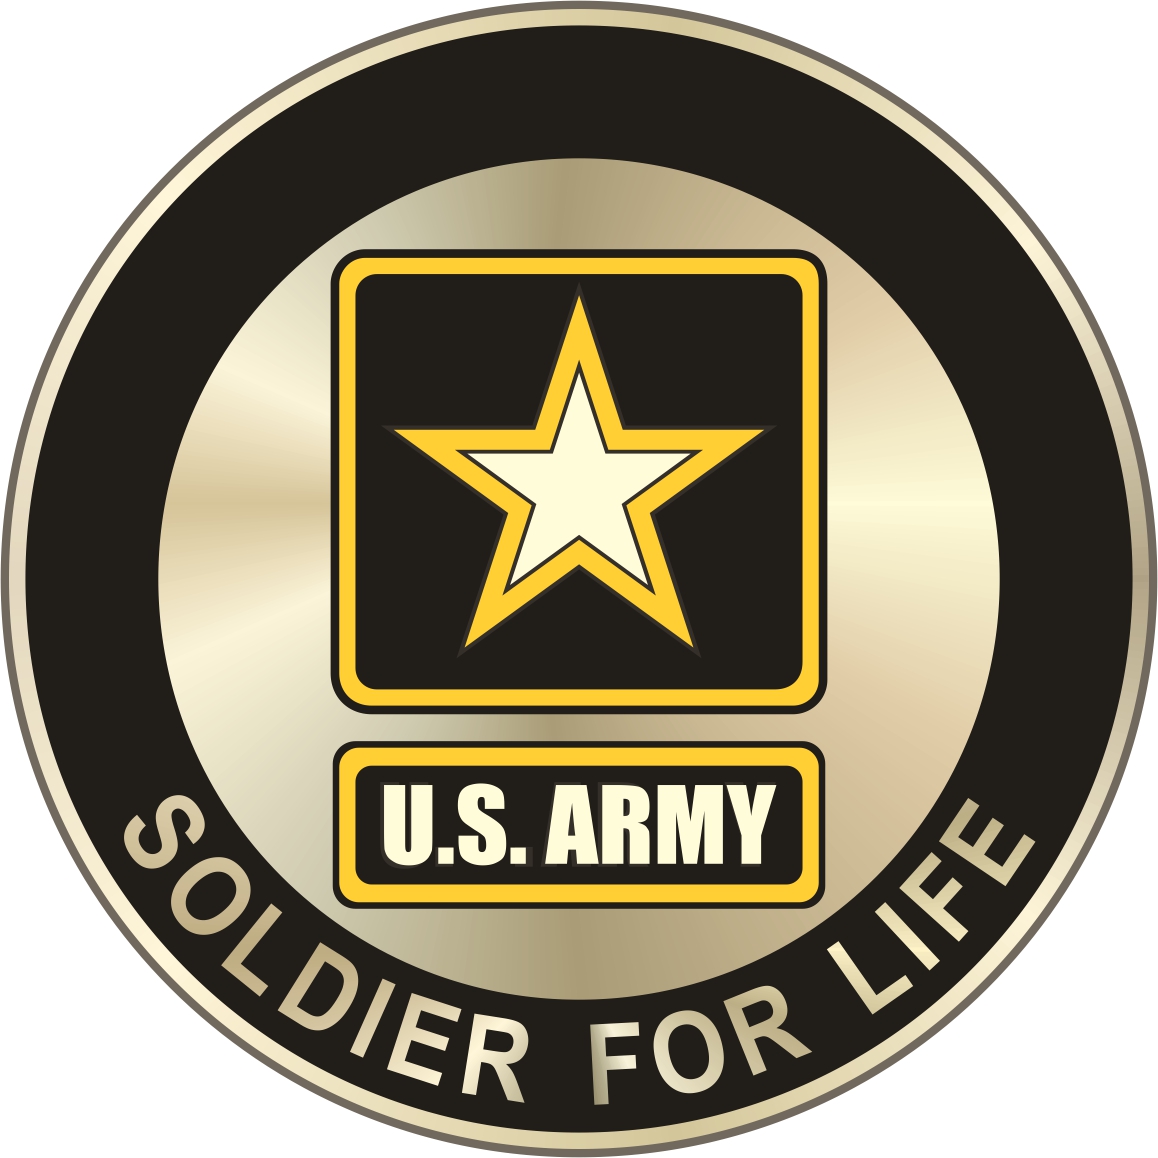 Soldier for Life window sticker | Retiree News